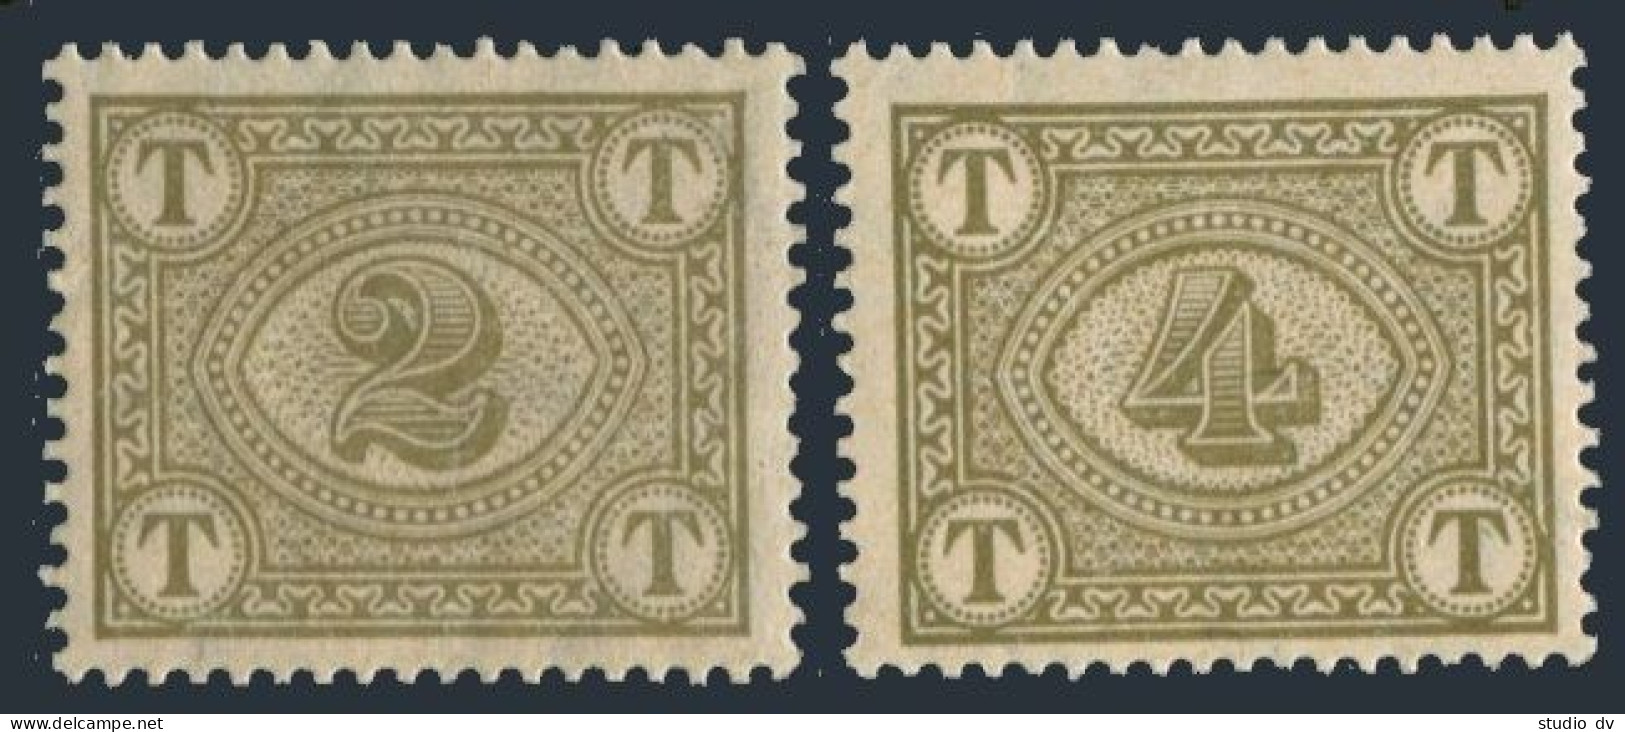 Dominican Republic J9-J10,MNH.Michel P9-P10. Postage Due Stamps,1913.Numeral. - Dominican Republic